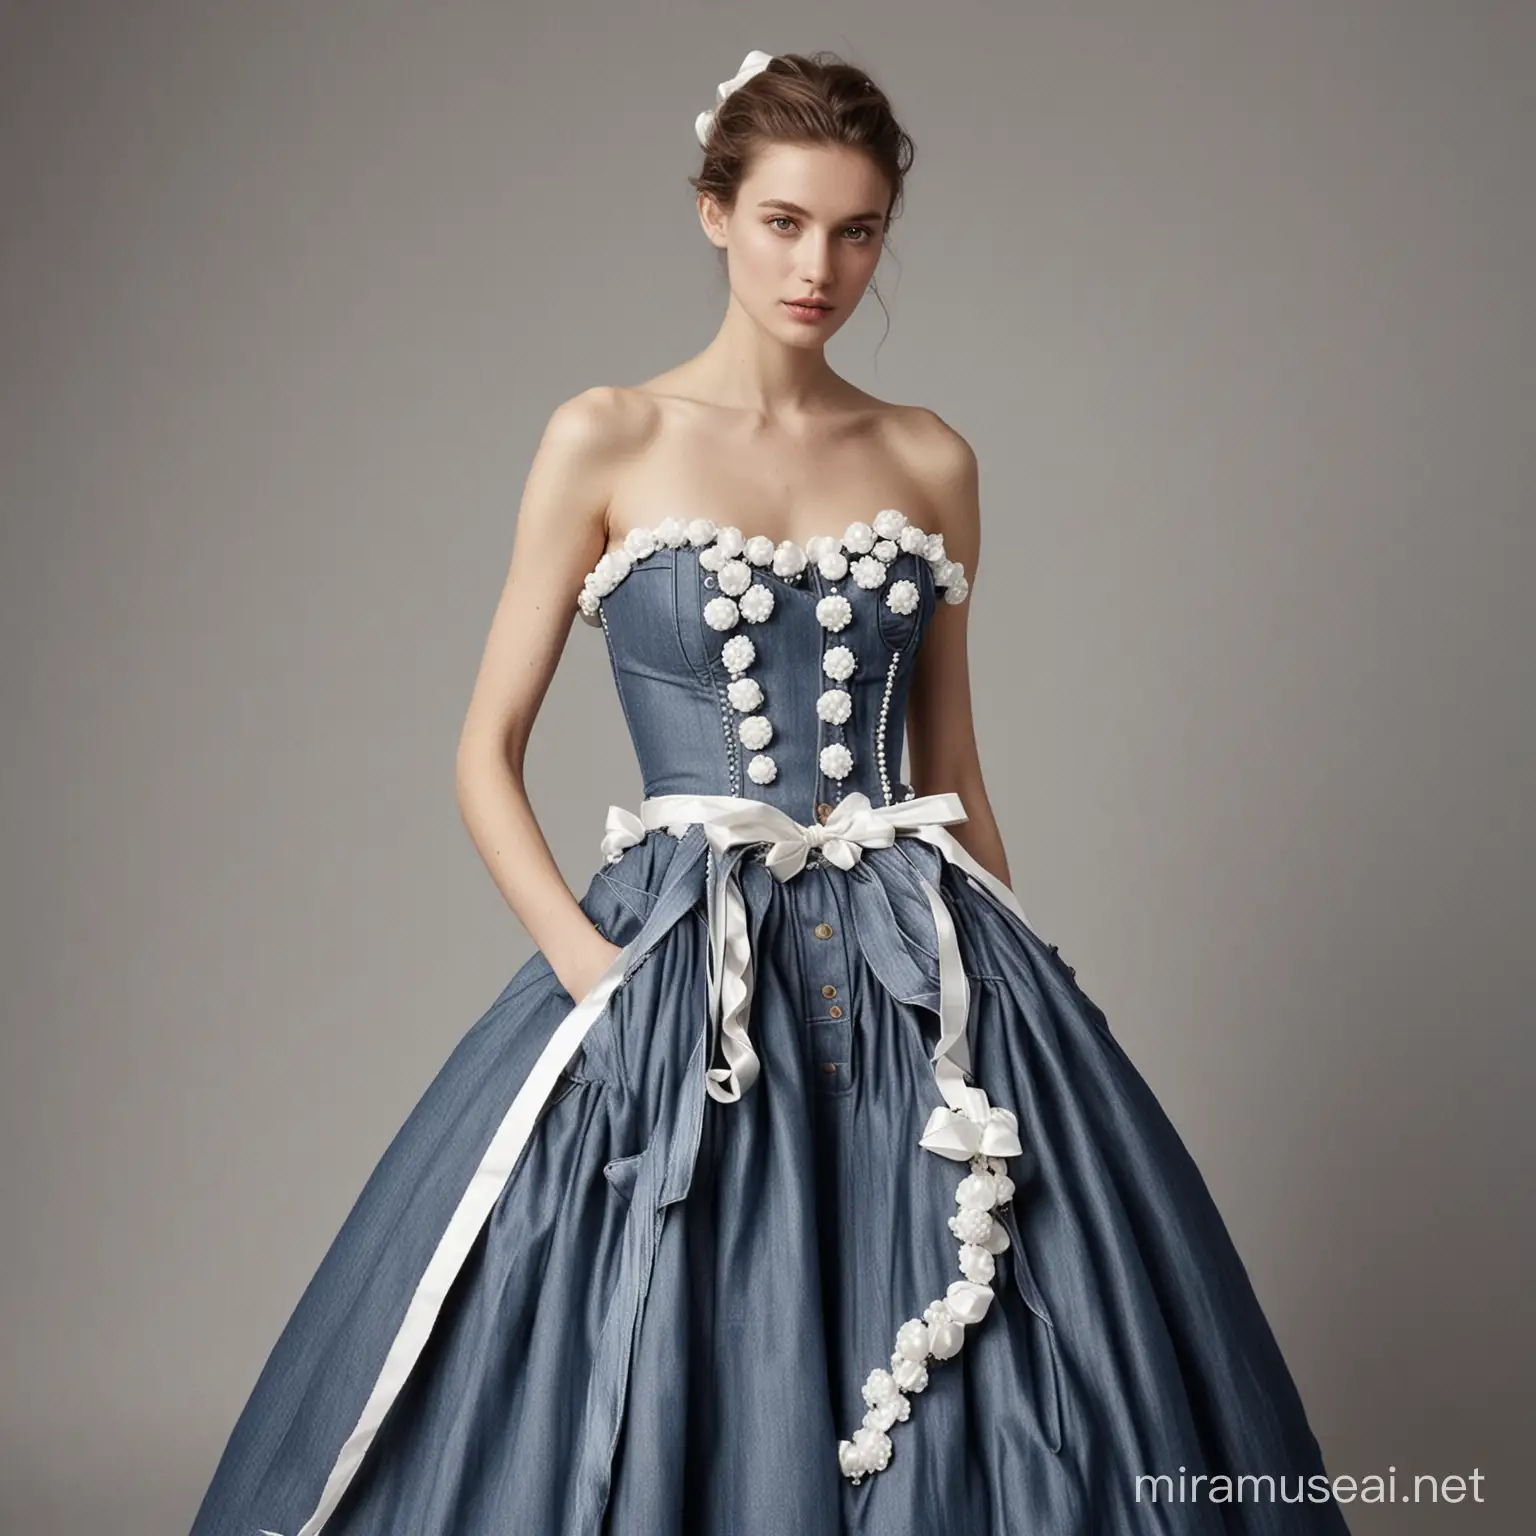 Elegant Denim Ballgown with Pearl and Ribbon Embellishments